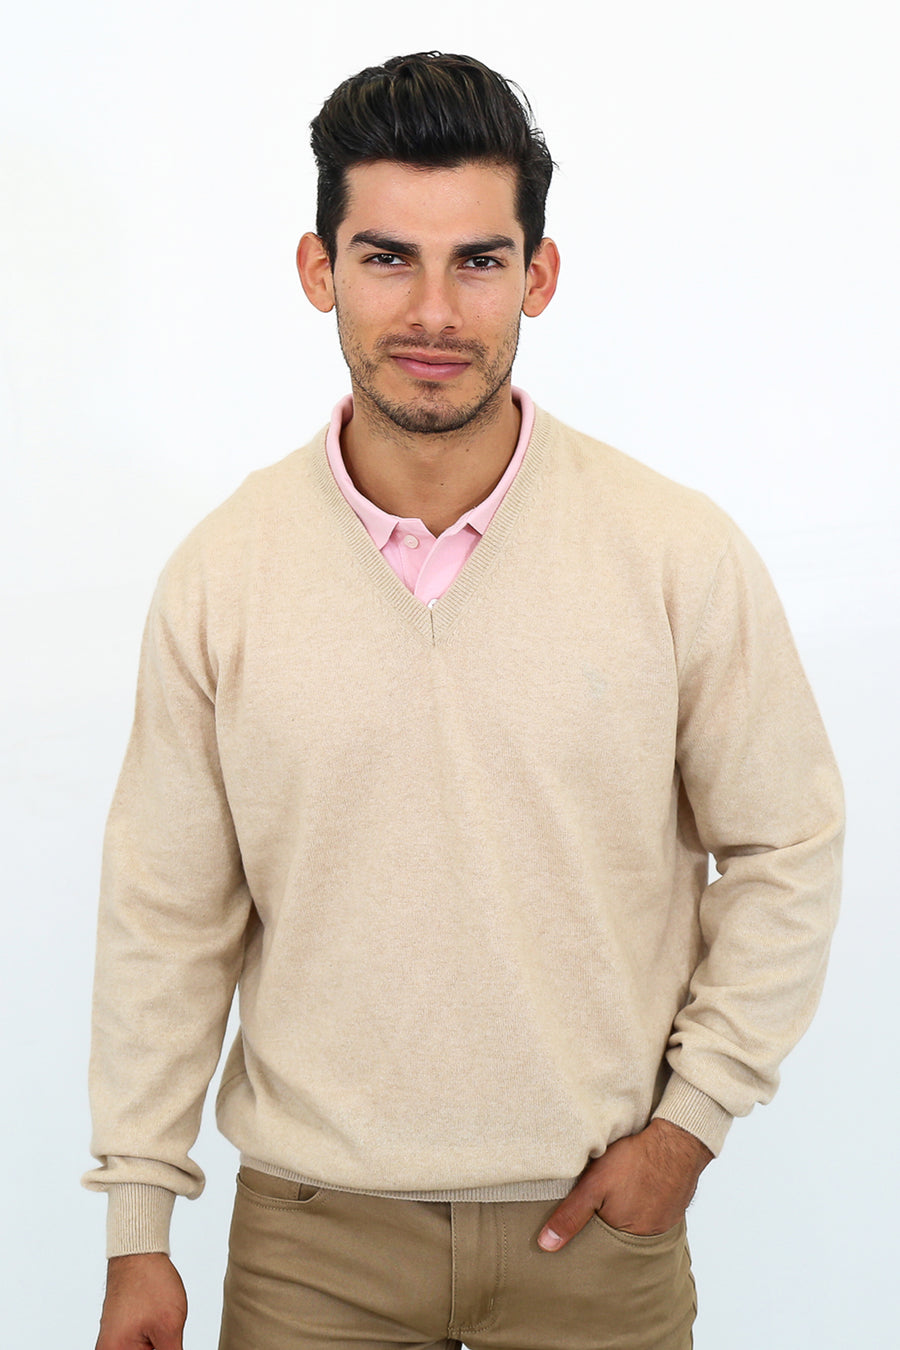 pine cashmere mens classic 100% pure organic cashmere v neck sweater in tan